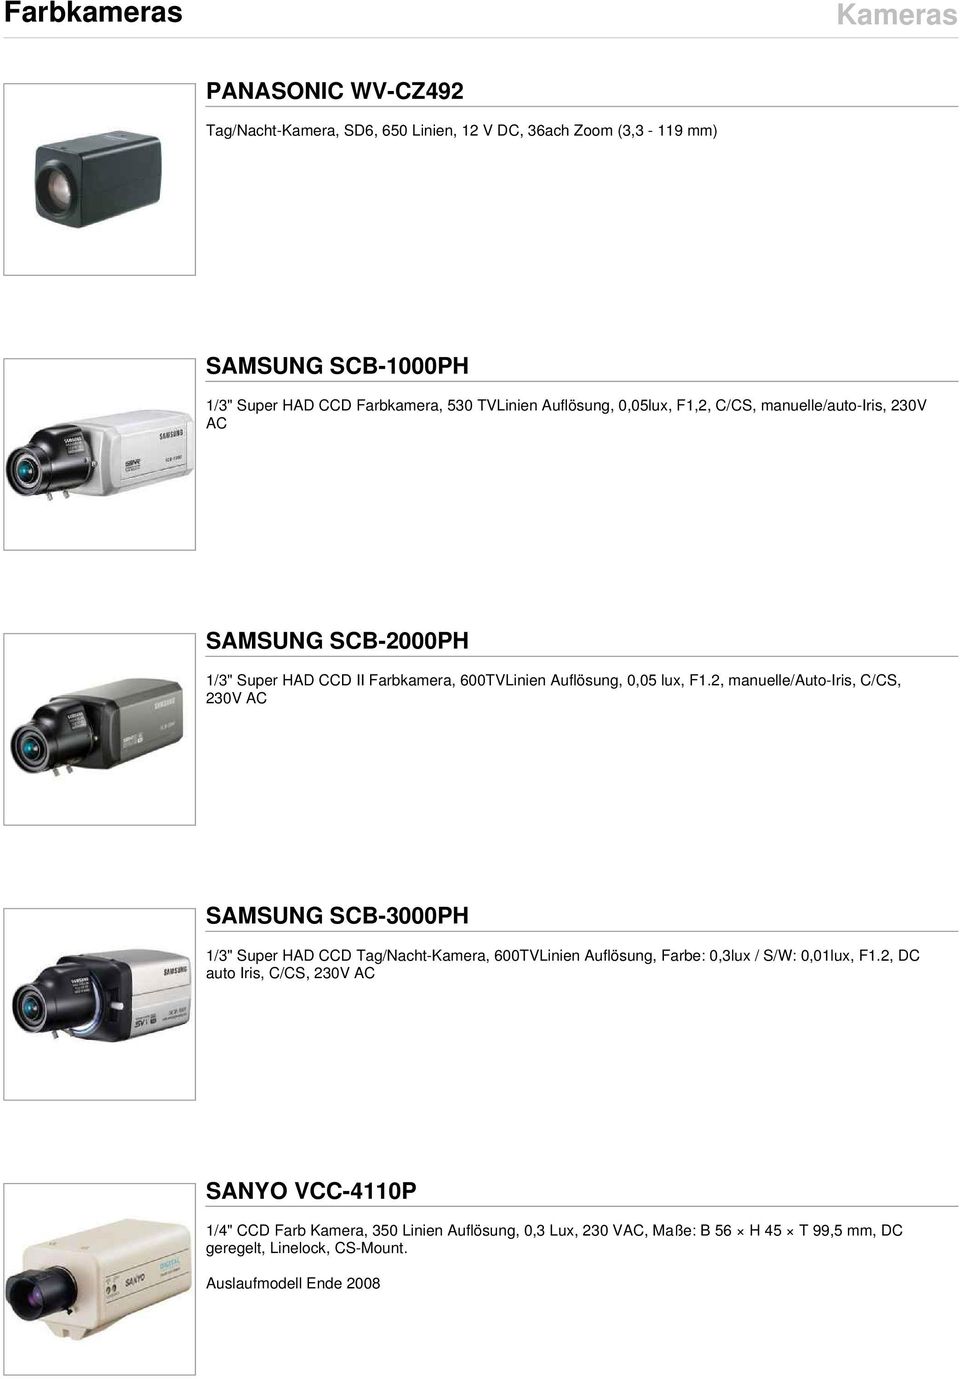 2, manuelle/auto-iris, C/CS, 230V AC SAMSUNG SCB-3000PH 1/3" Super HAD CCD Tag/Nacht-Kamera, 600TVLinien Auflösung, Farbe: 0,3lux / S/W: 0,01lux, F1.